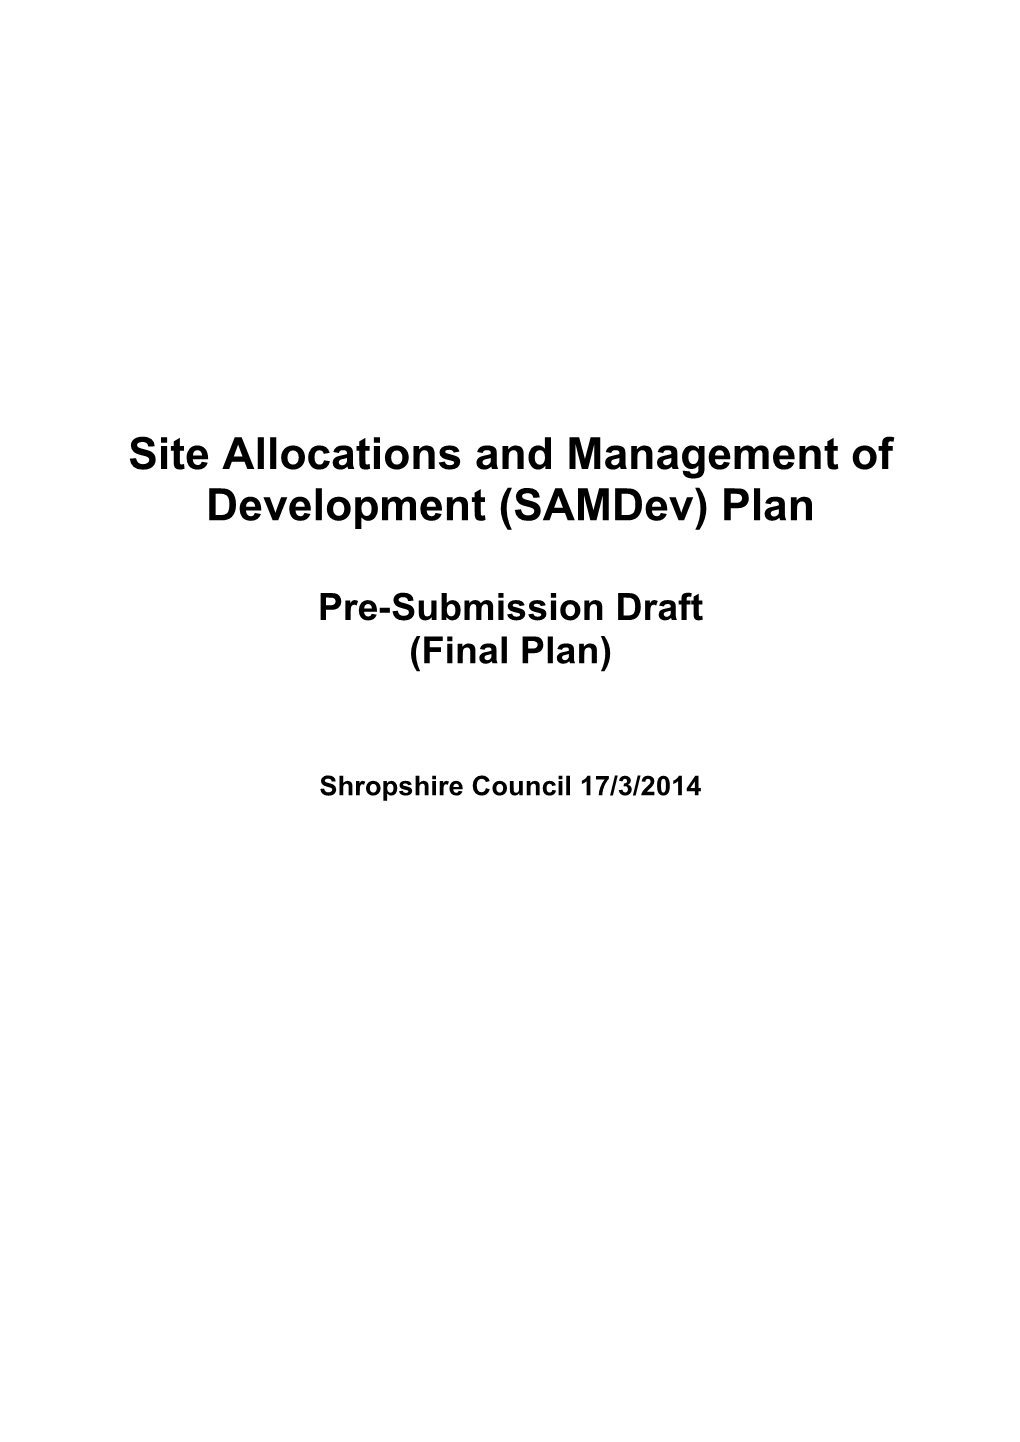 Samdev-Pre-Submission-Draft-Plan